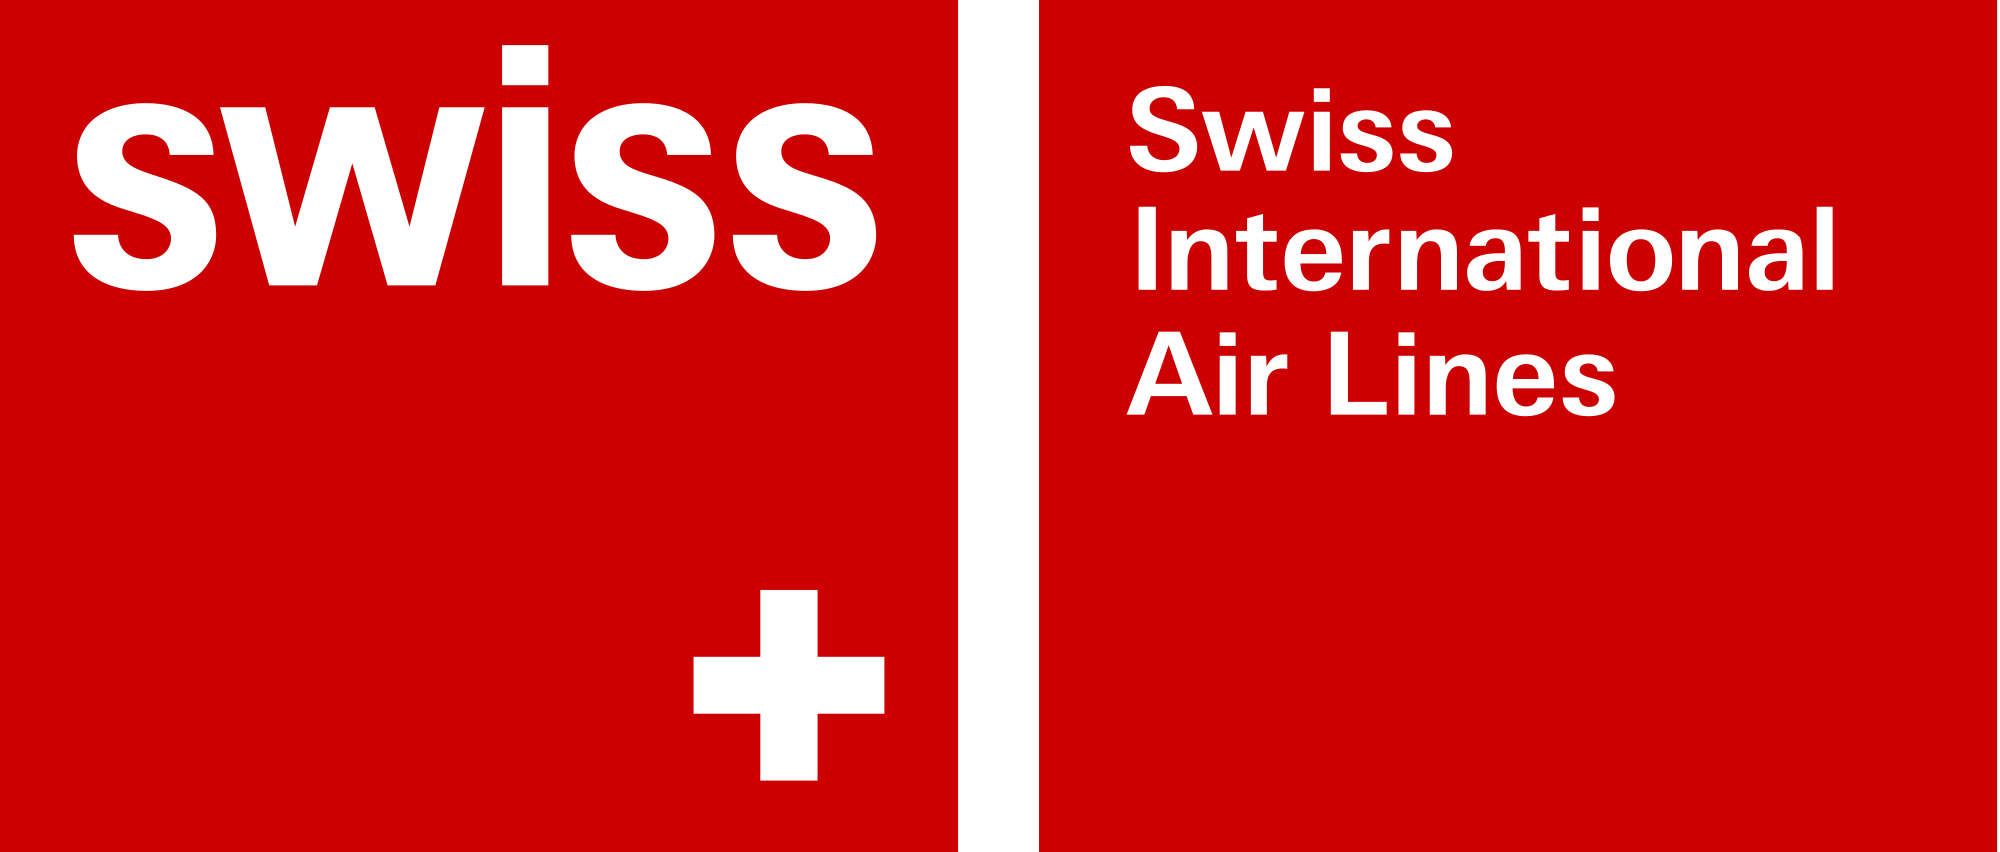 Swiss International Airlines Logo - File:Swiss International Air Lines.svg - Wikimedia Commons